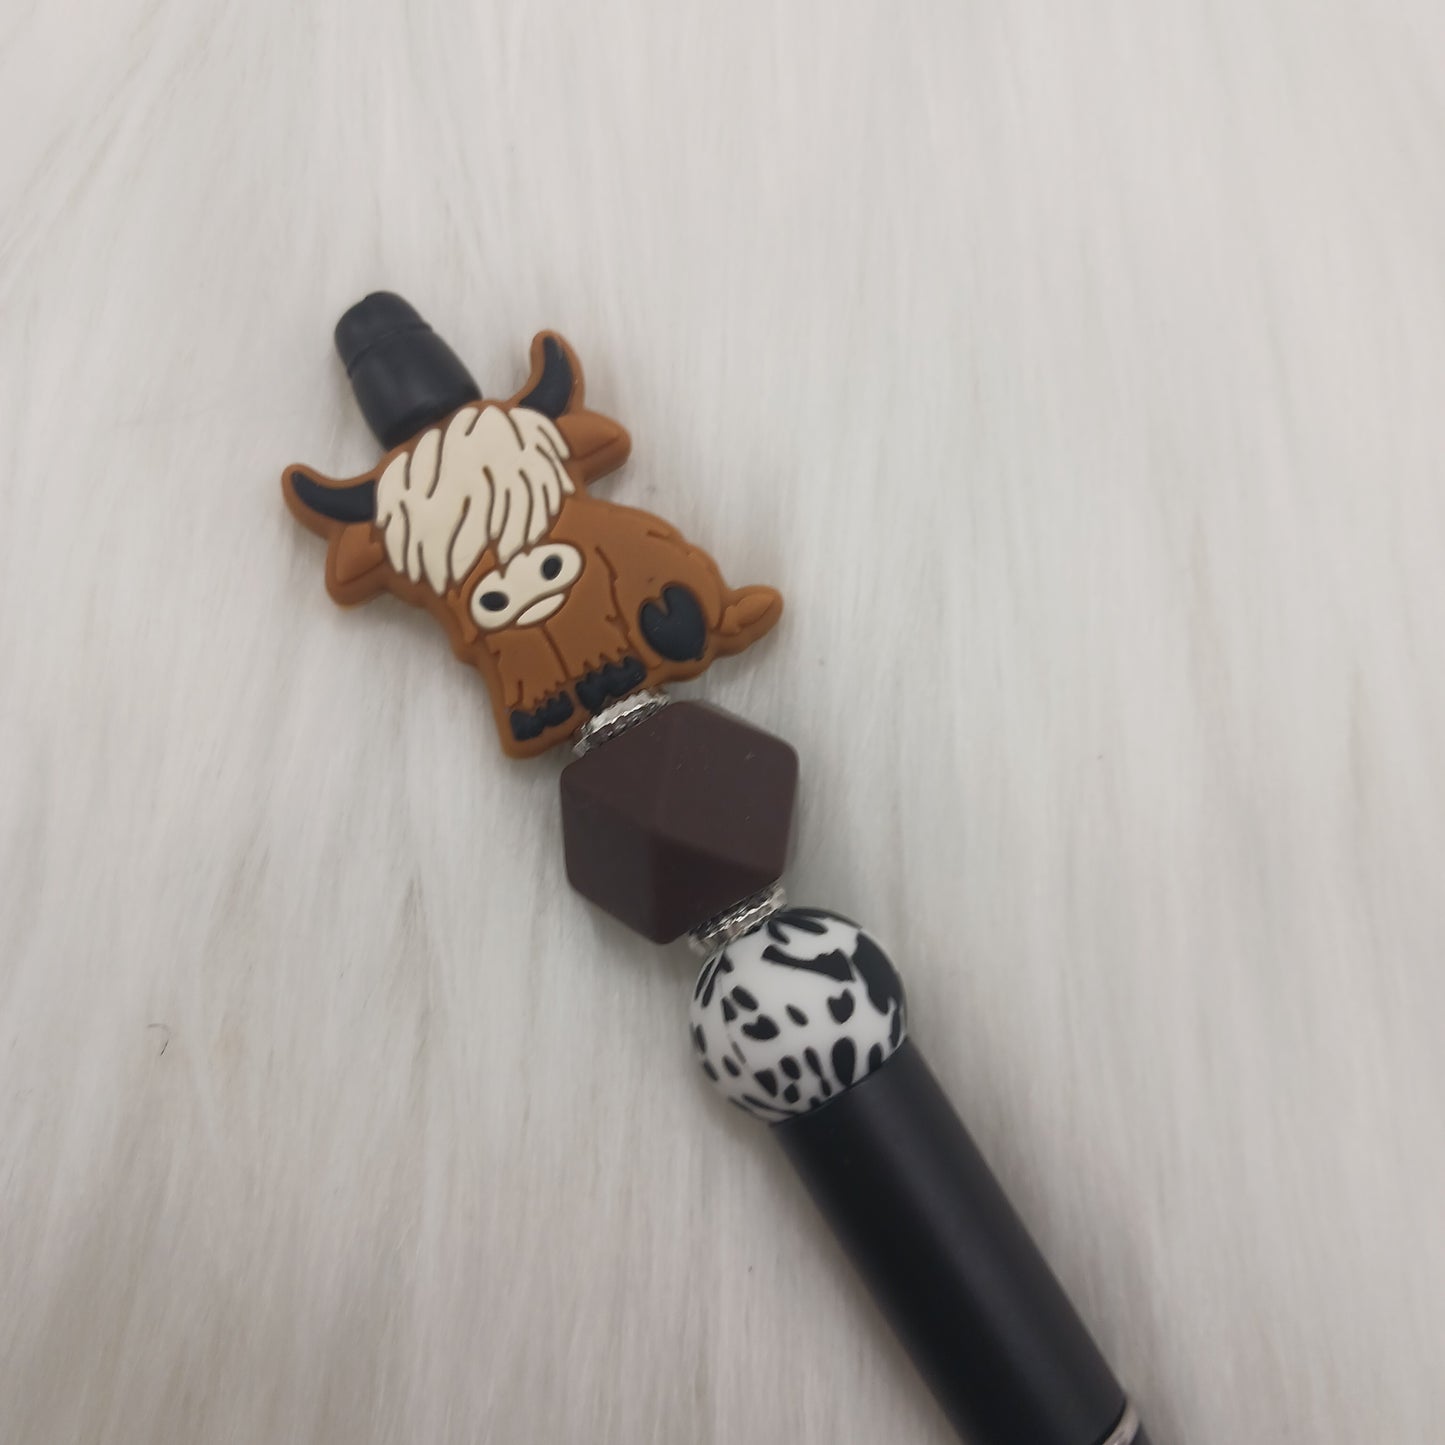 Highland cow beaded pen